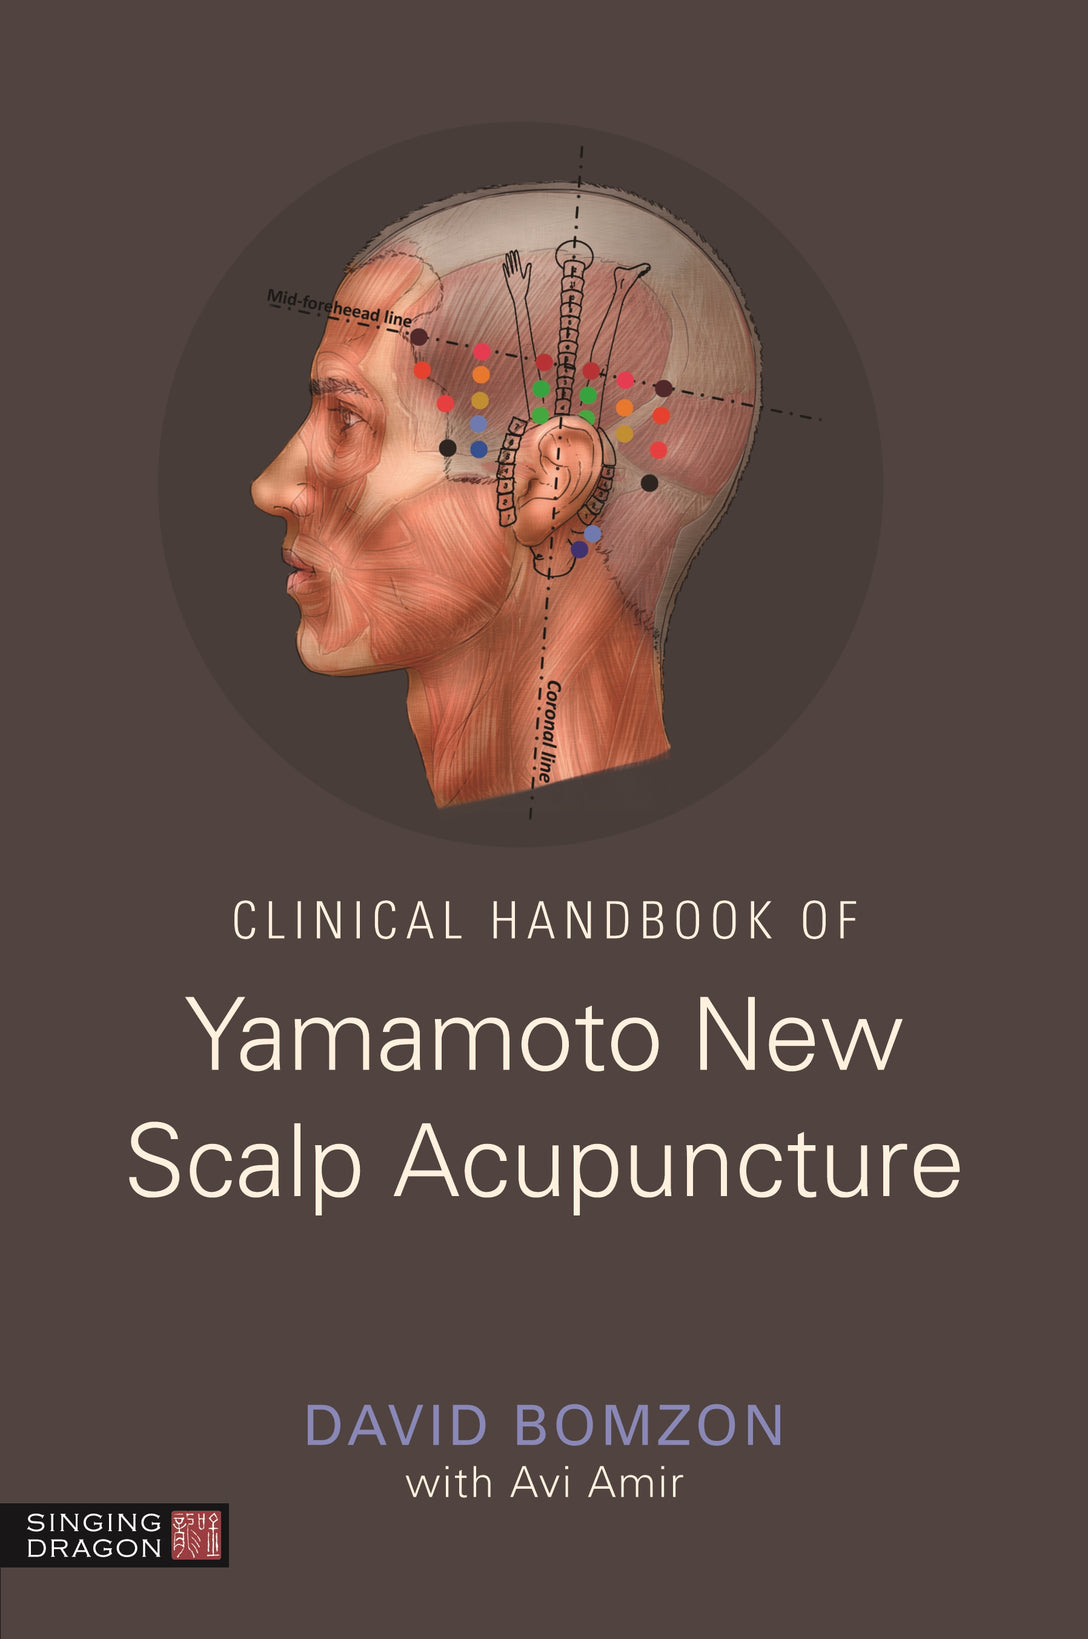 Clinical Handbook of Yamamoto New Scalp Acupuncture by David Bomzon, Abraham Amir